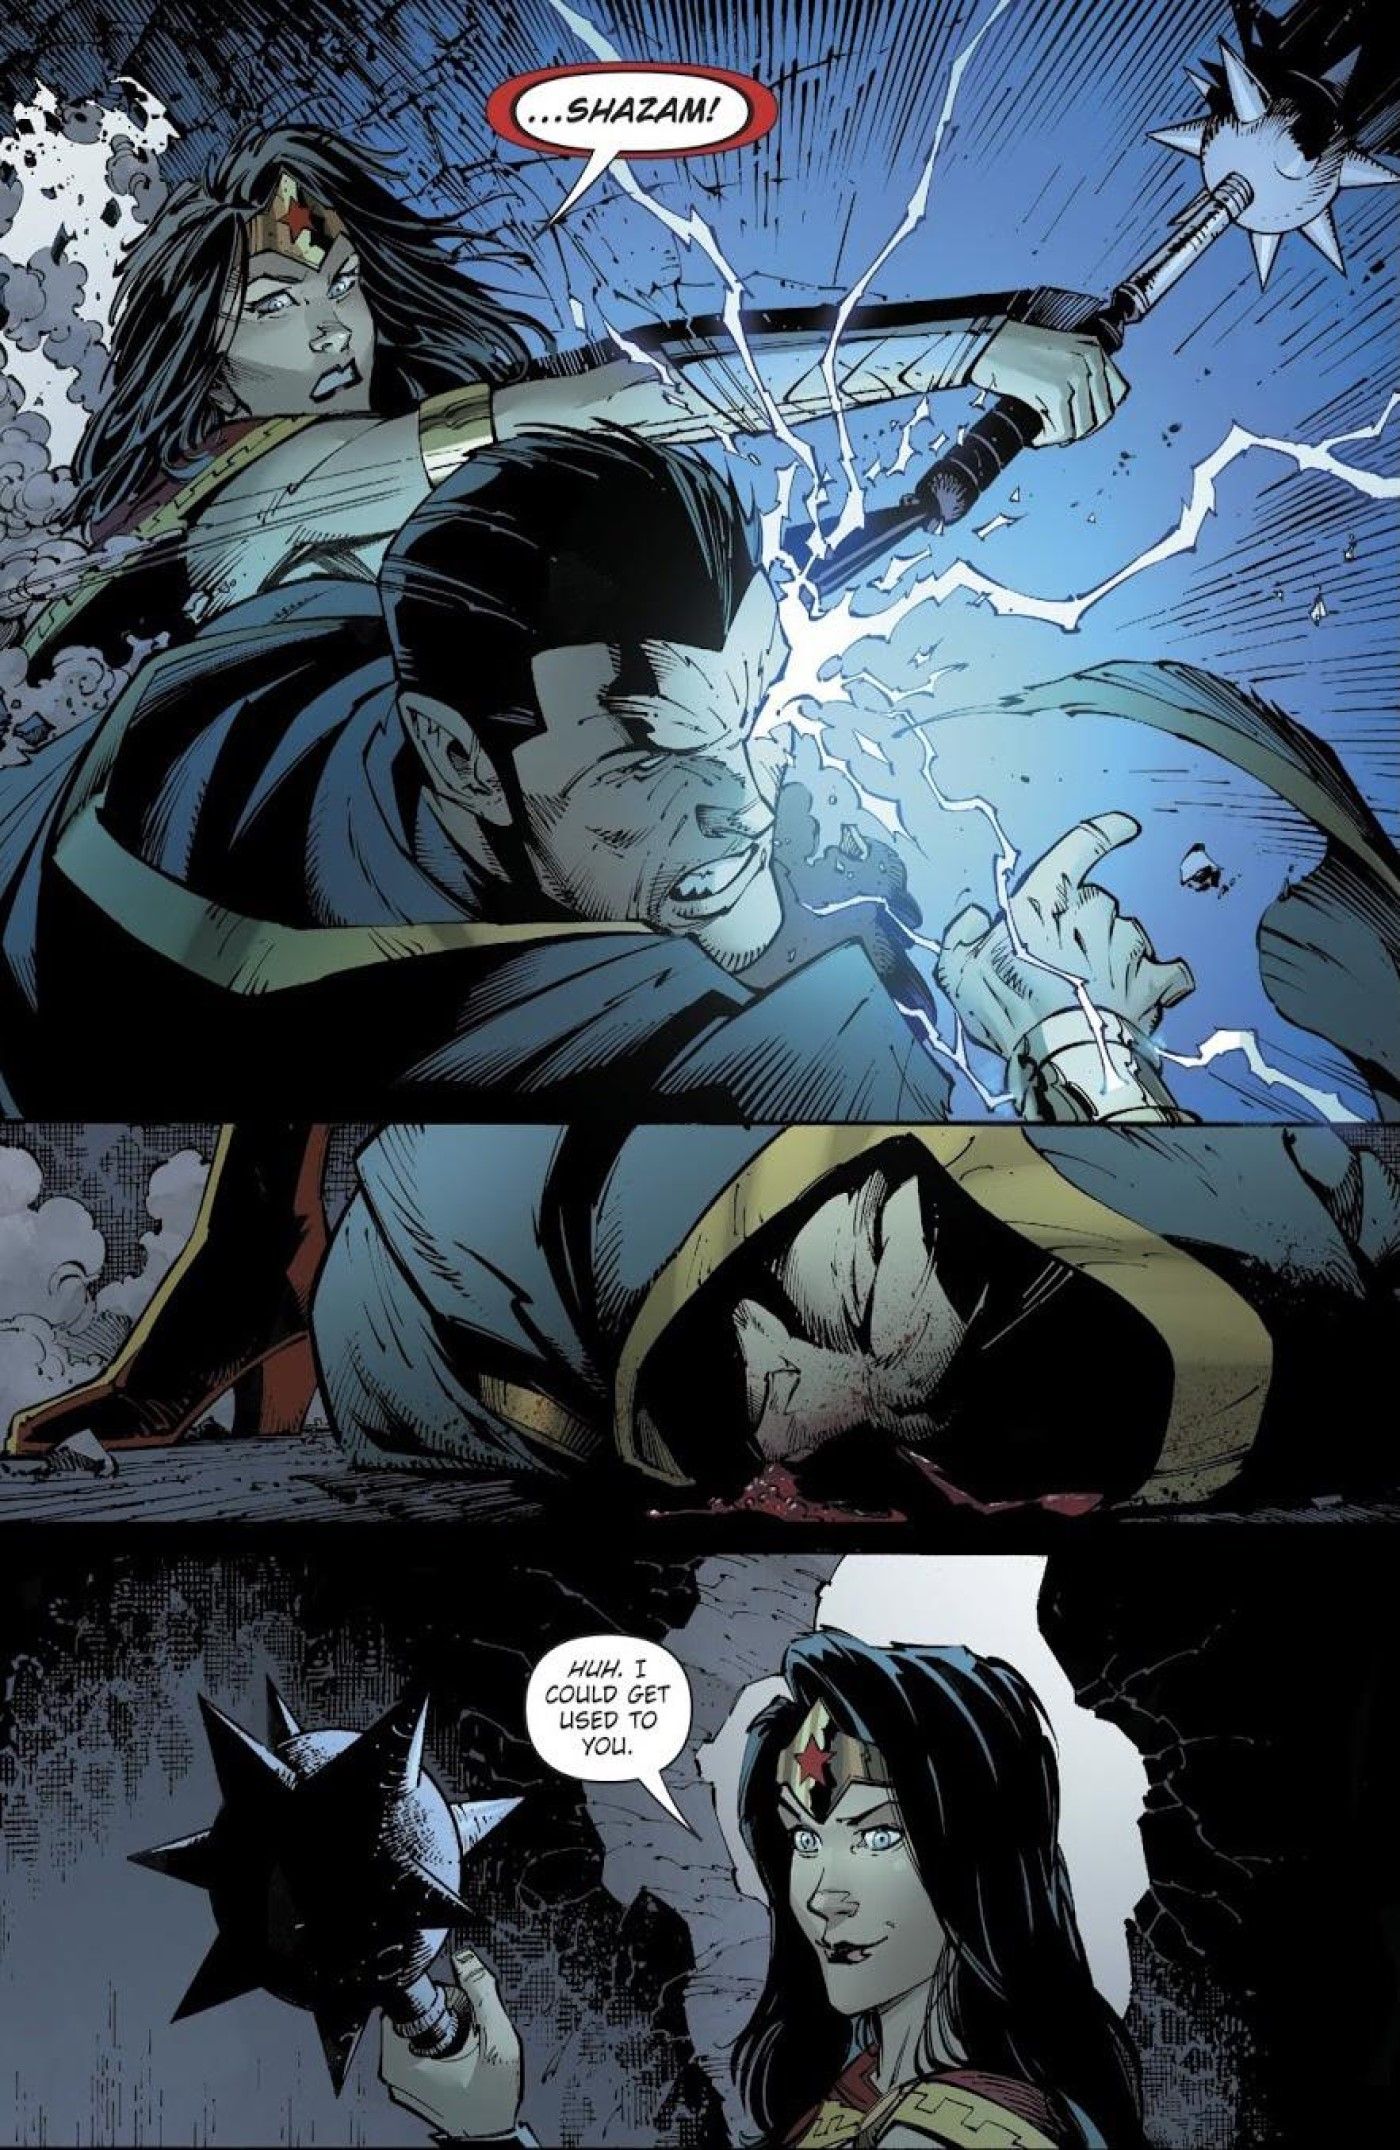 Mulher Maravilha derrota Black Adam com Hawkman's Mace.